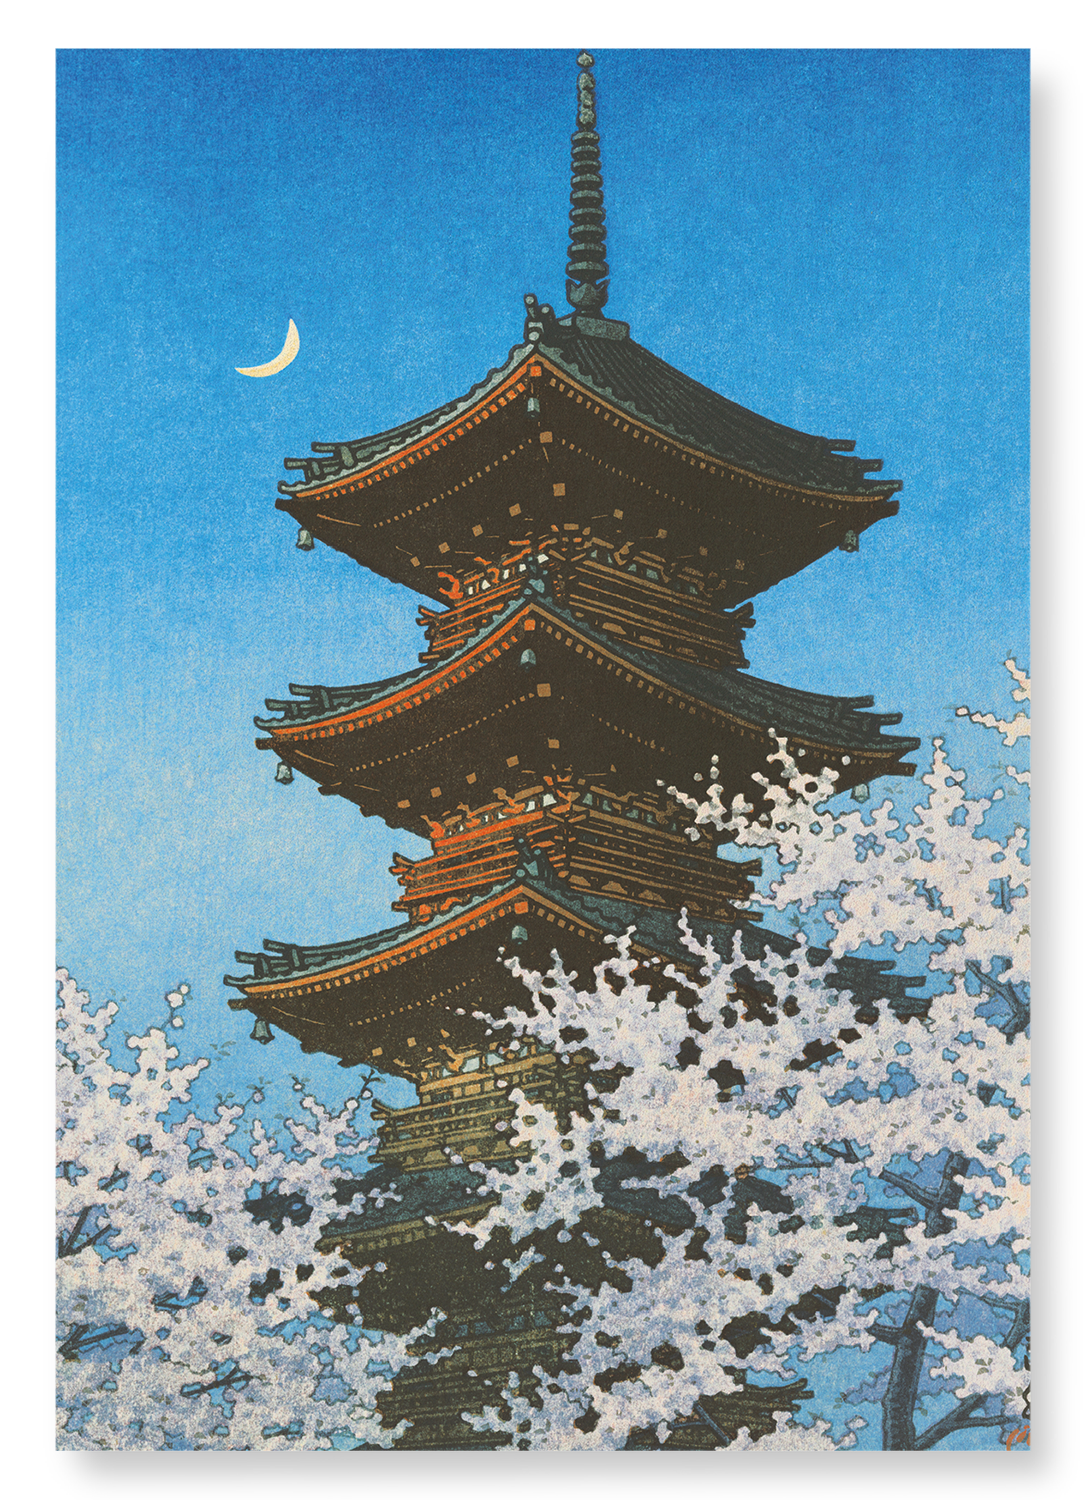 EVENING GLOW ON PAGODA: Japanese Art Print